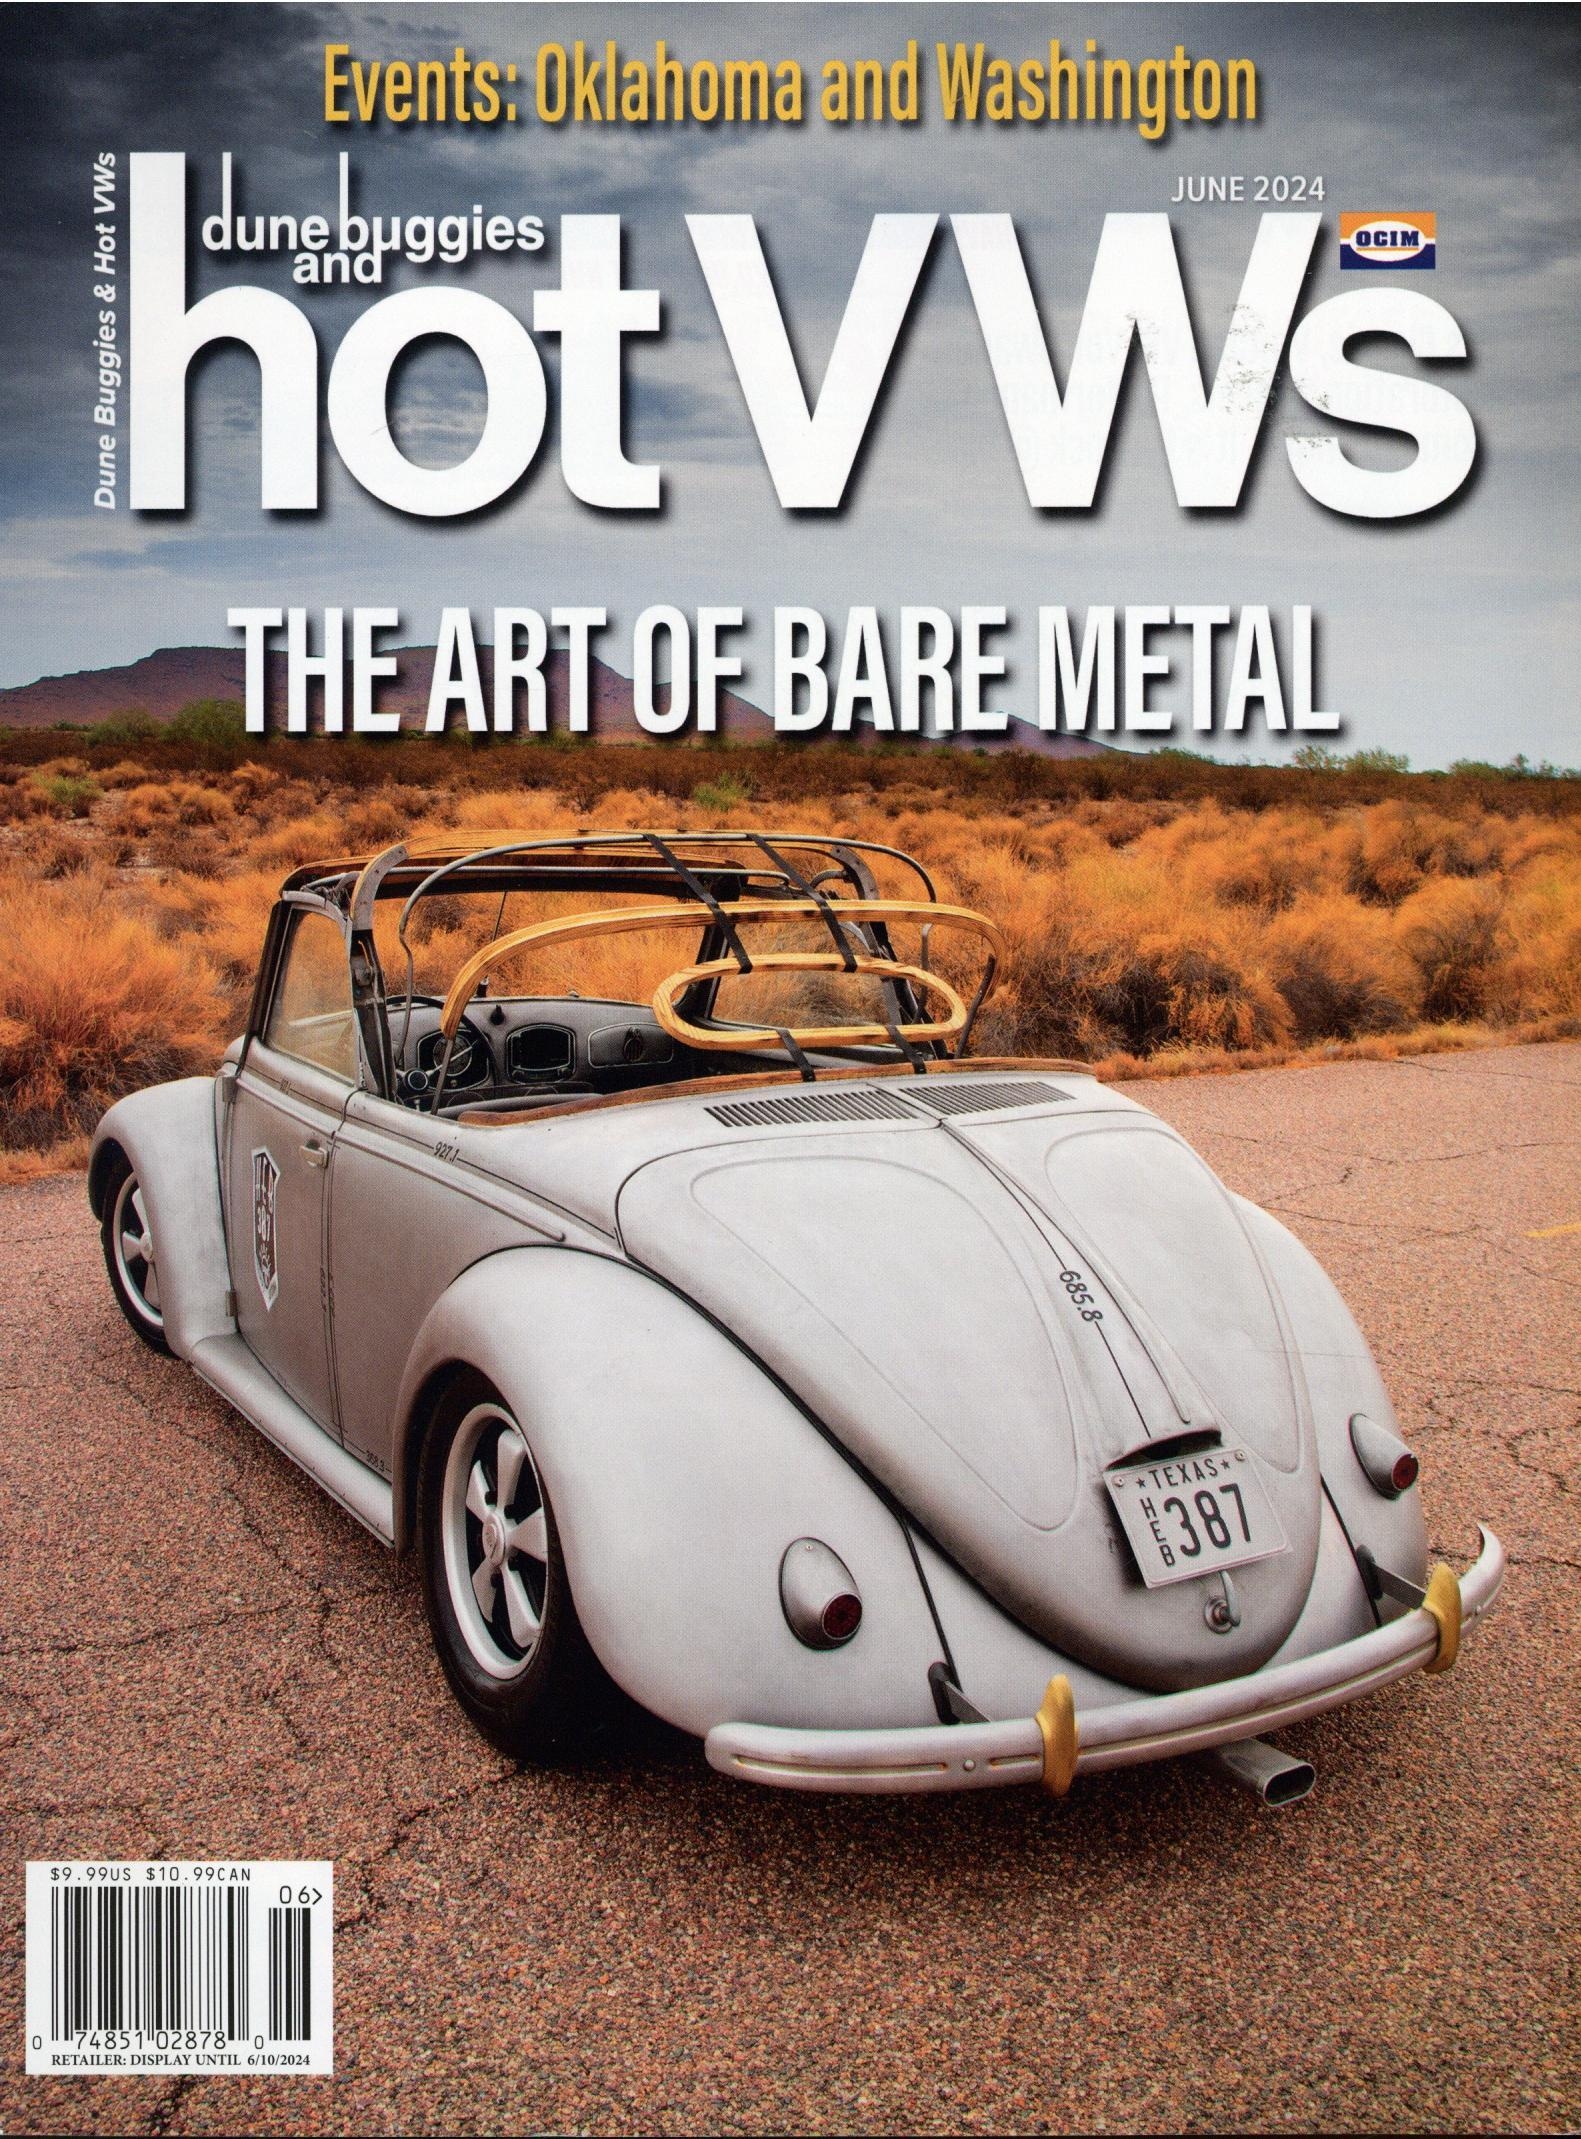 Hot Vws & Dune Buggies